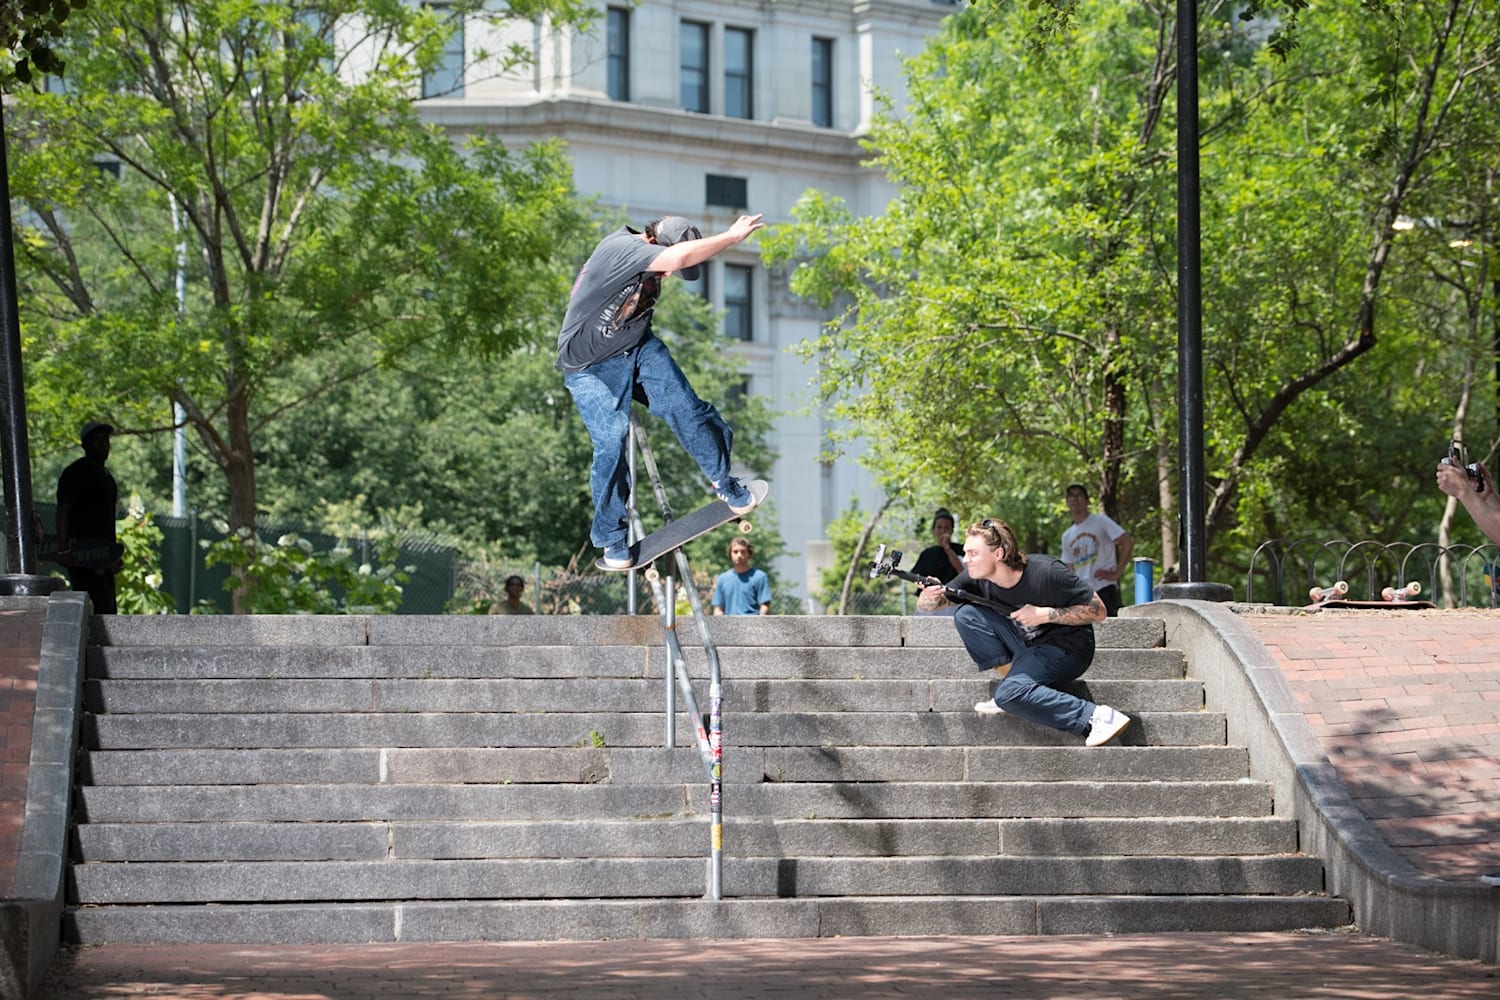 Skateboarder statue popping up in Brooklyn Bridge Park